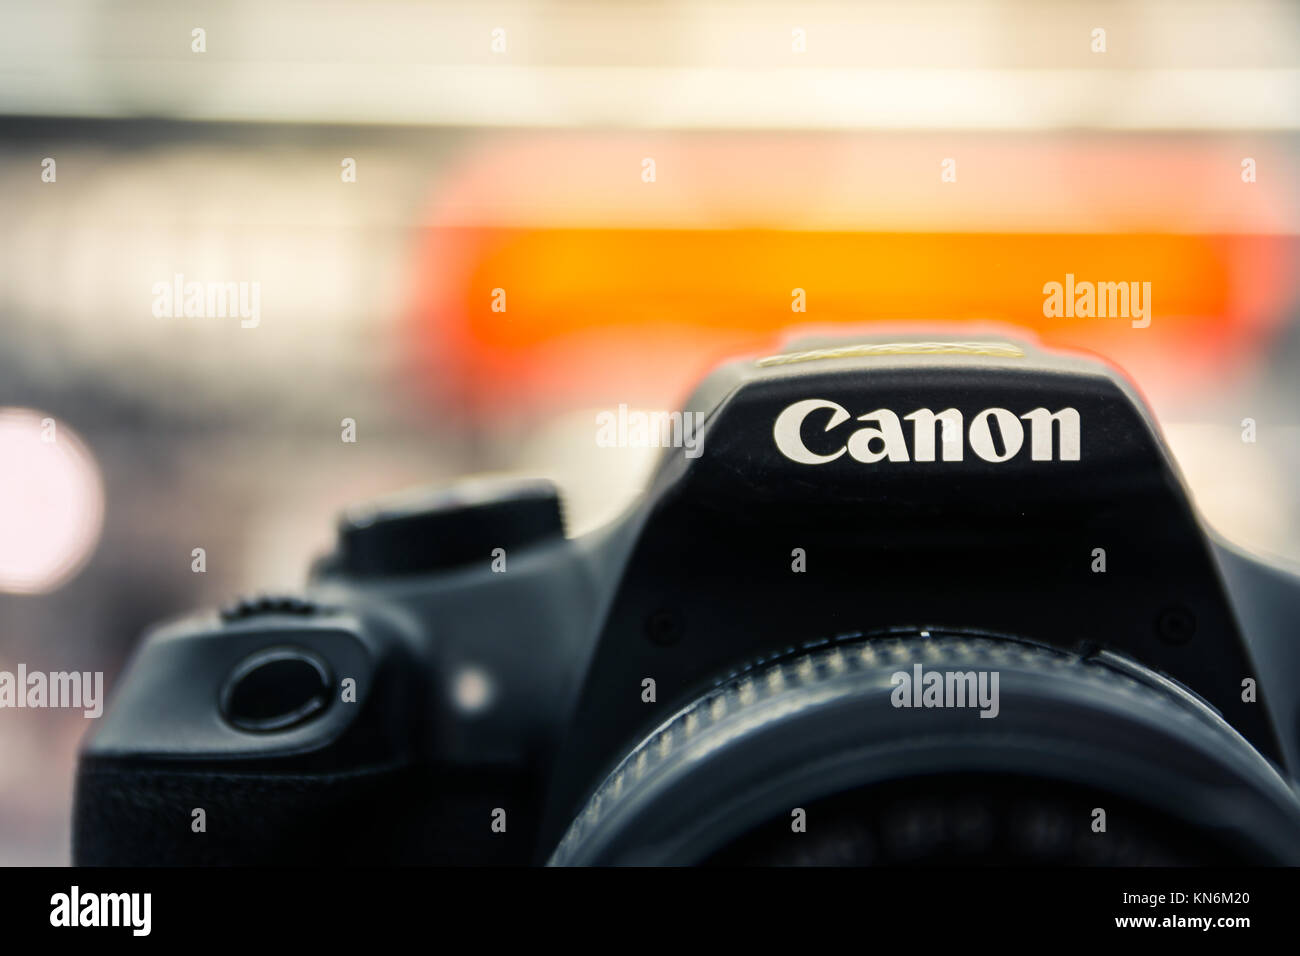 Canon Kamera Logo Closeup Modell Anzeige Neue Fotografie Equipment Demo 27. Oktober 2017 Stockfoto